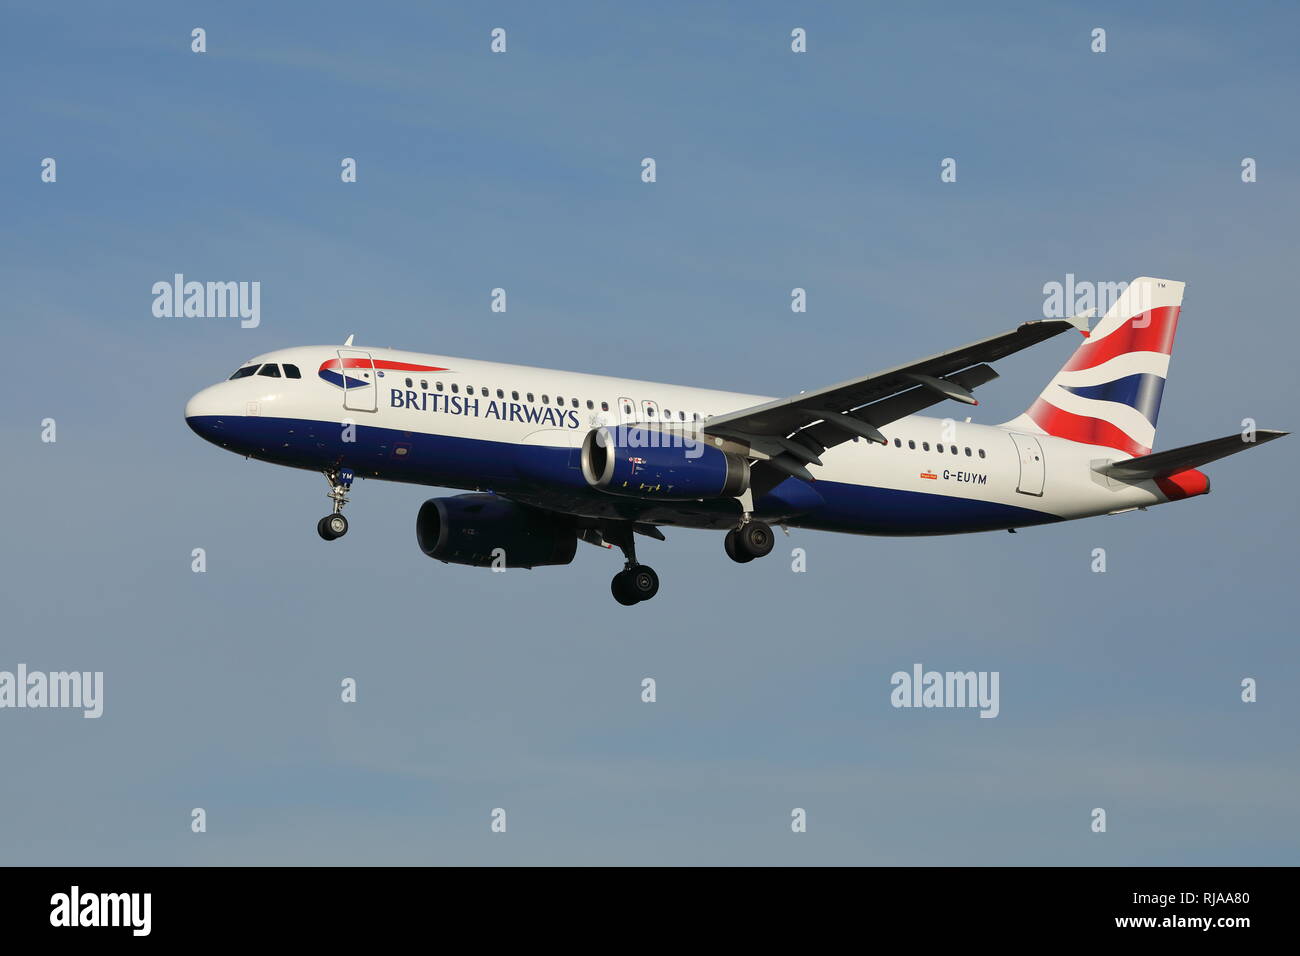 British Airways Airbus A320 passenger aircraft, reg. no G-EUYM. Stock Photo